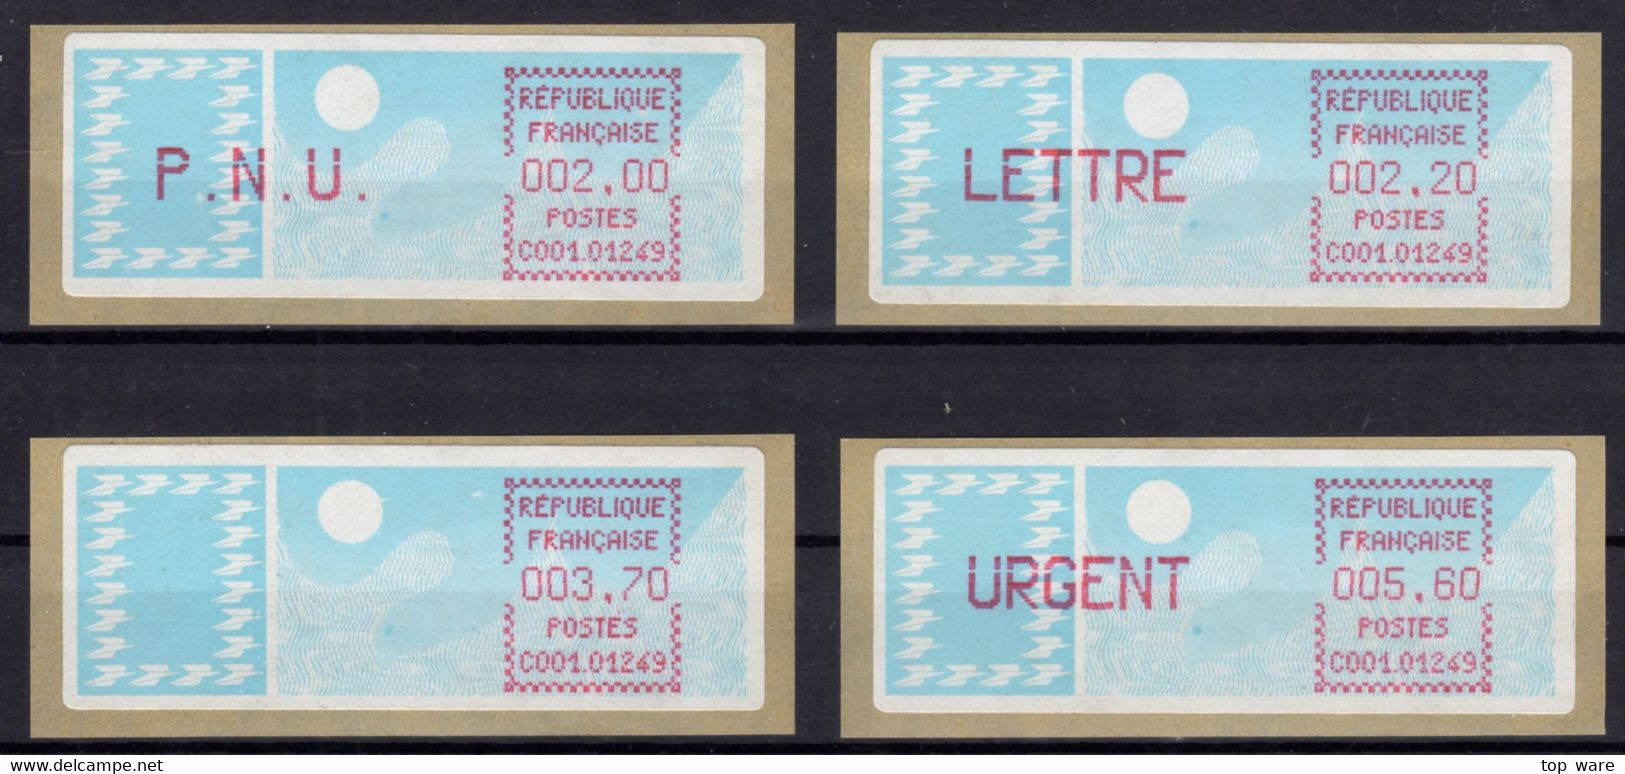 France ATM Stamps C001.01249 Michel 6.3 Zd Series ZS4 Neuf / MNH / Crouzet LSA Distributeurs Automatenmarken Frama Lisa - 1985 Papier « Carrier »